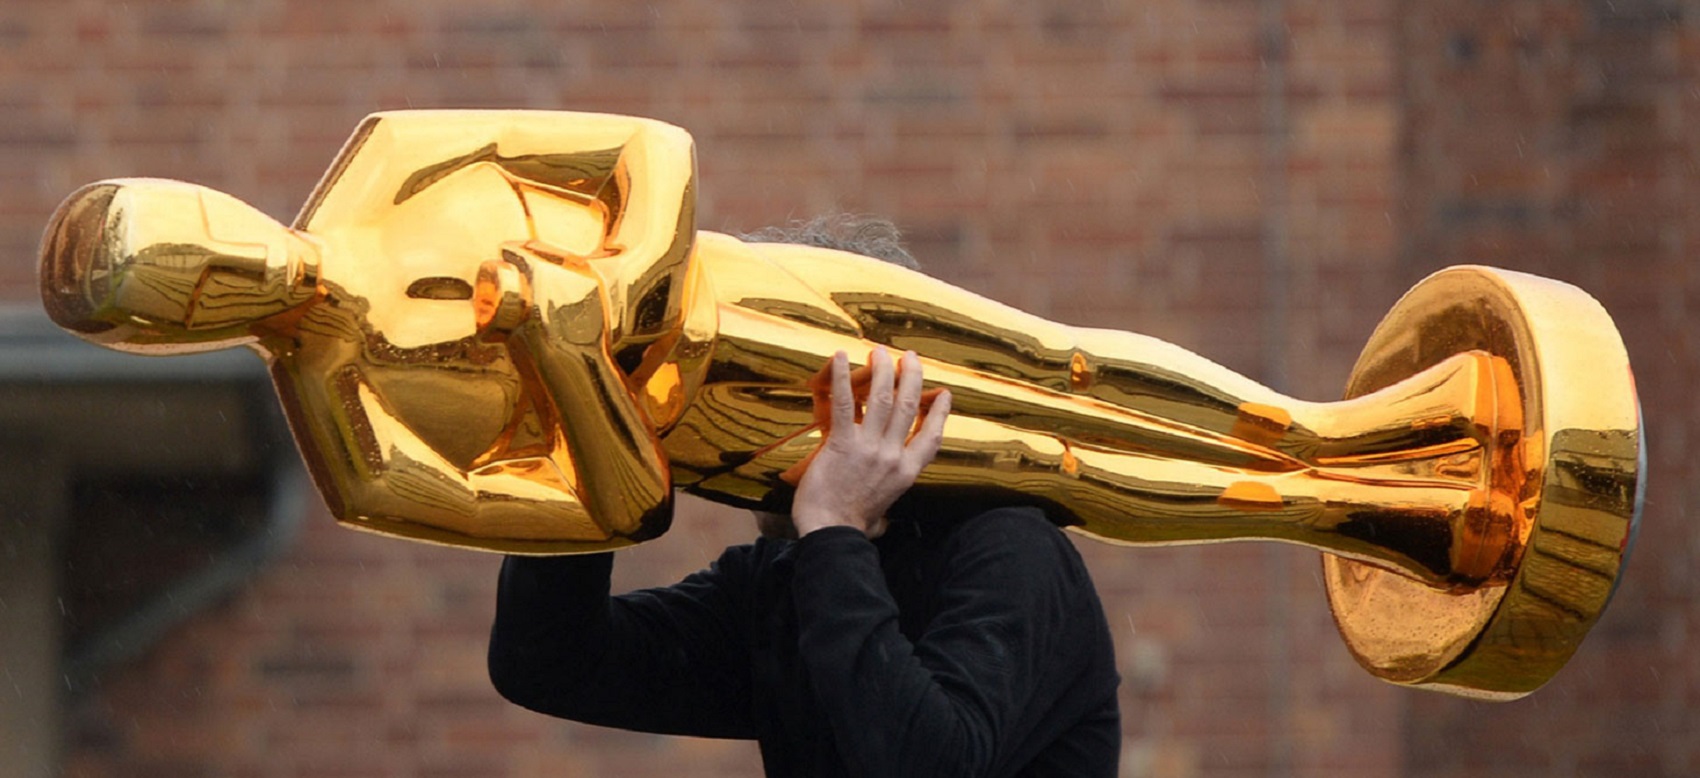 Academy Awards 2016: “The Revenant” e “Mad Max: Fury Road” spopolano fra le nomination per gli Oscar